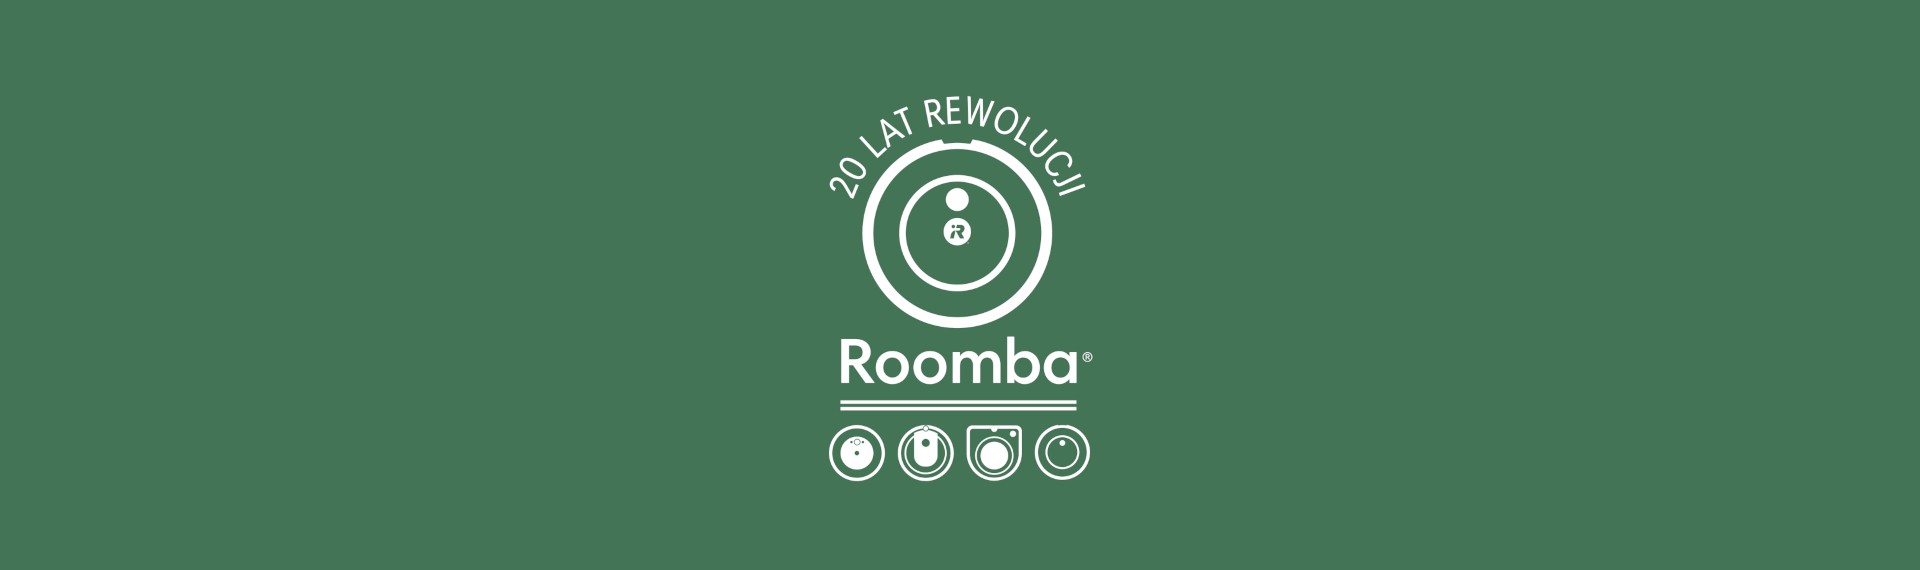 Roomba ma już 20 lat!